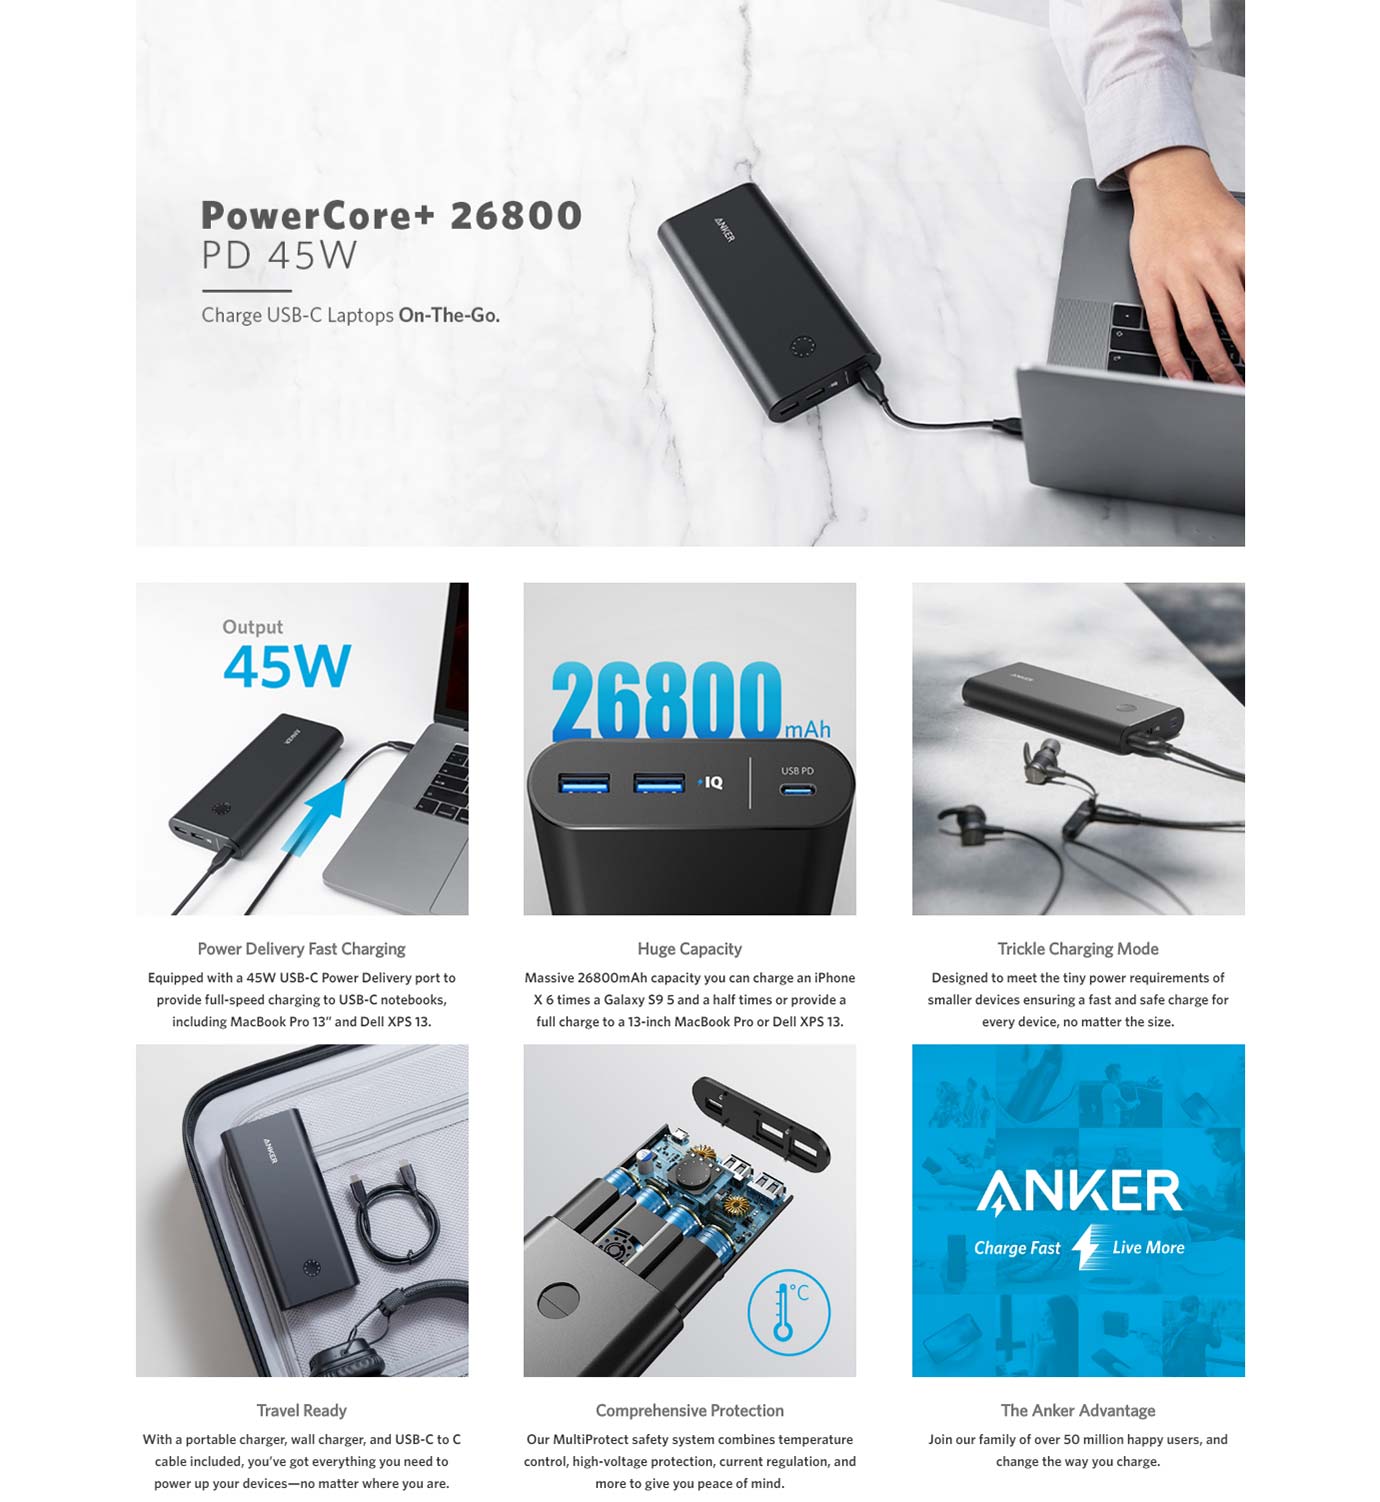 PowerCore+ 26800 PD